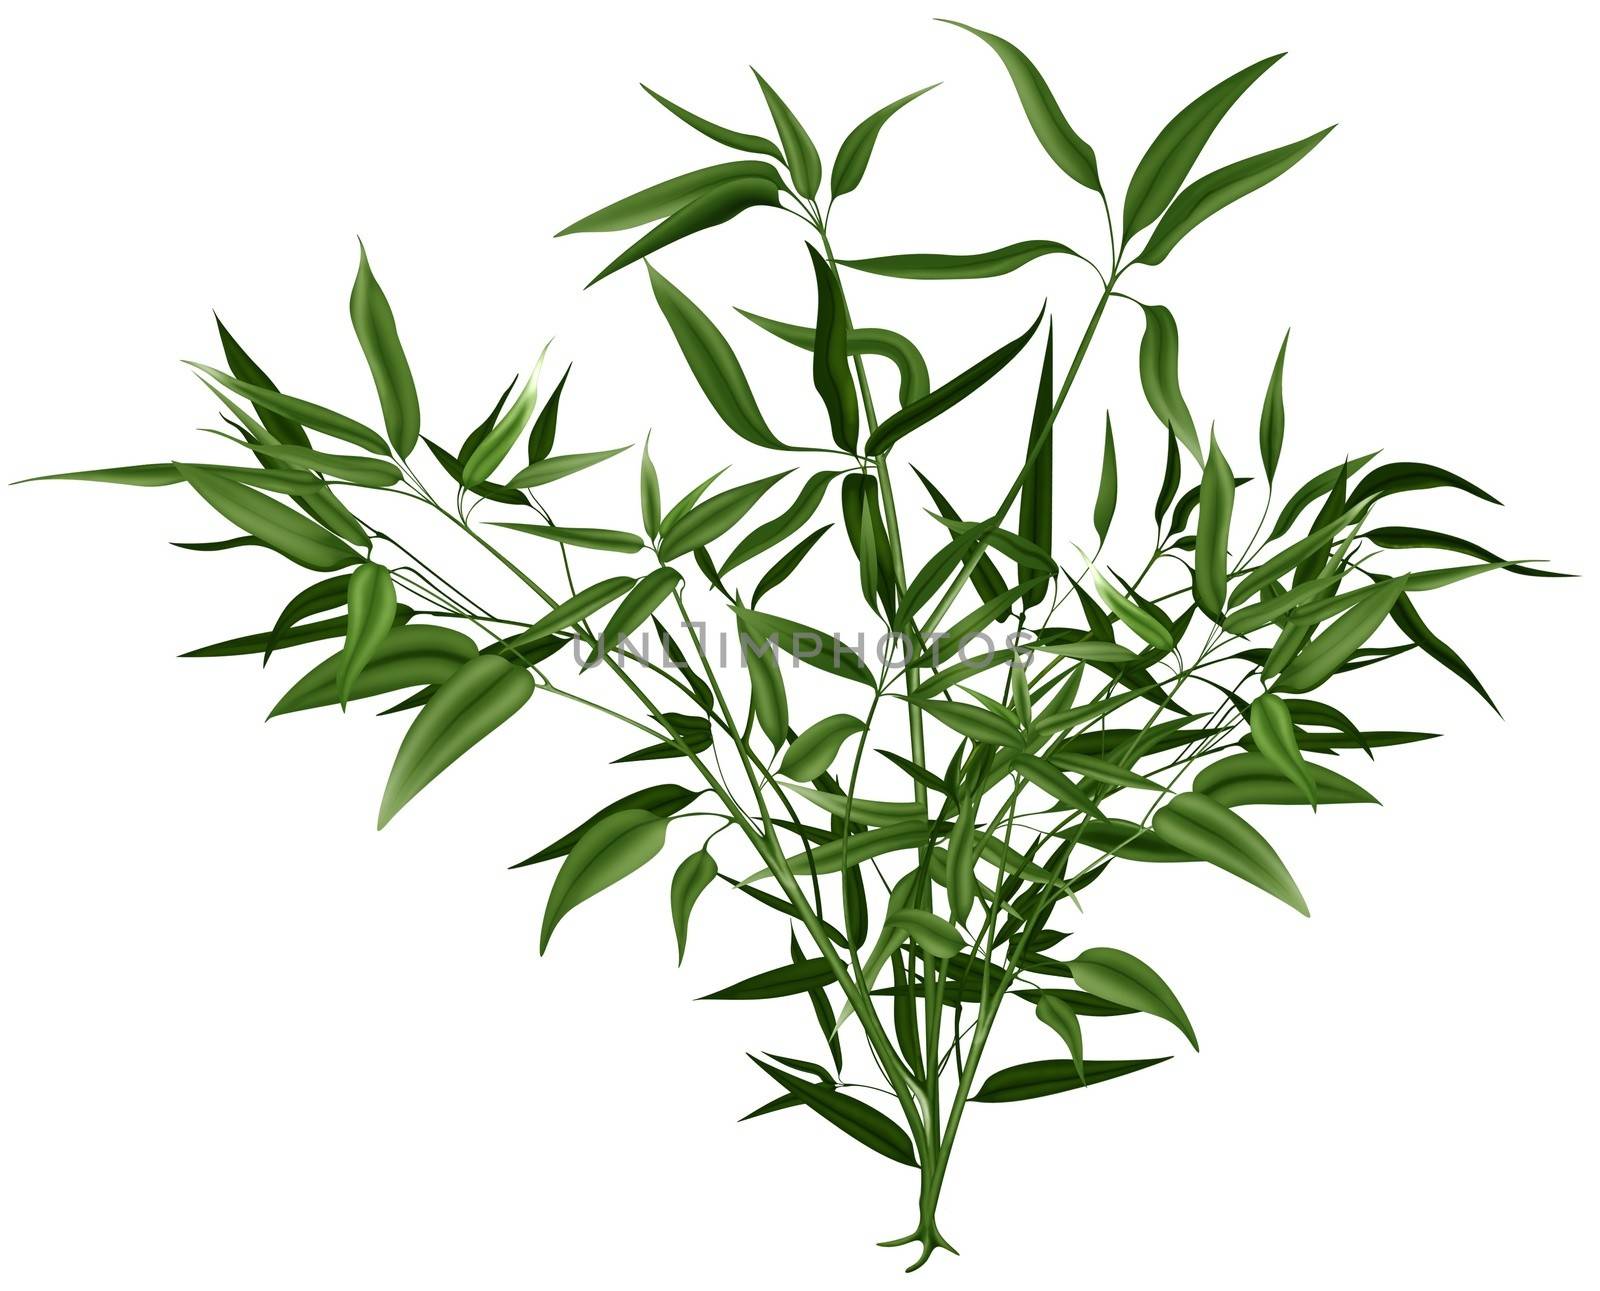 Shrub - Colored Plant Illustration, Bitmap Image